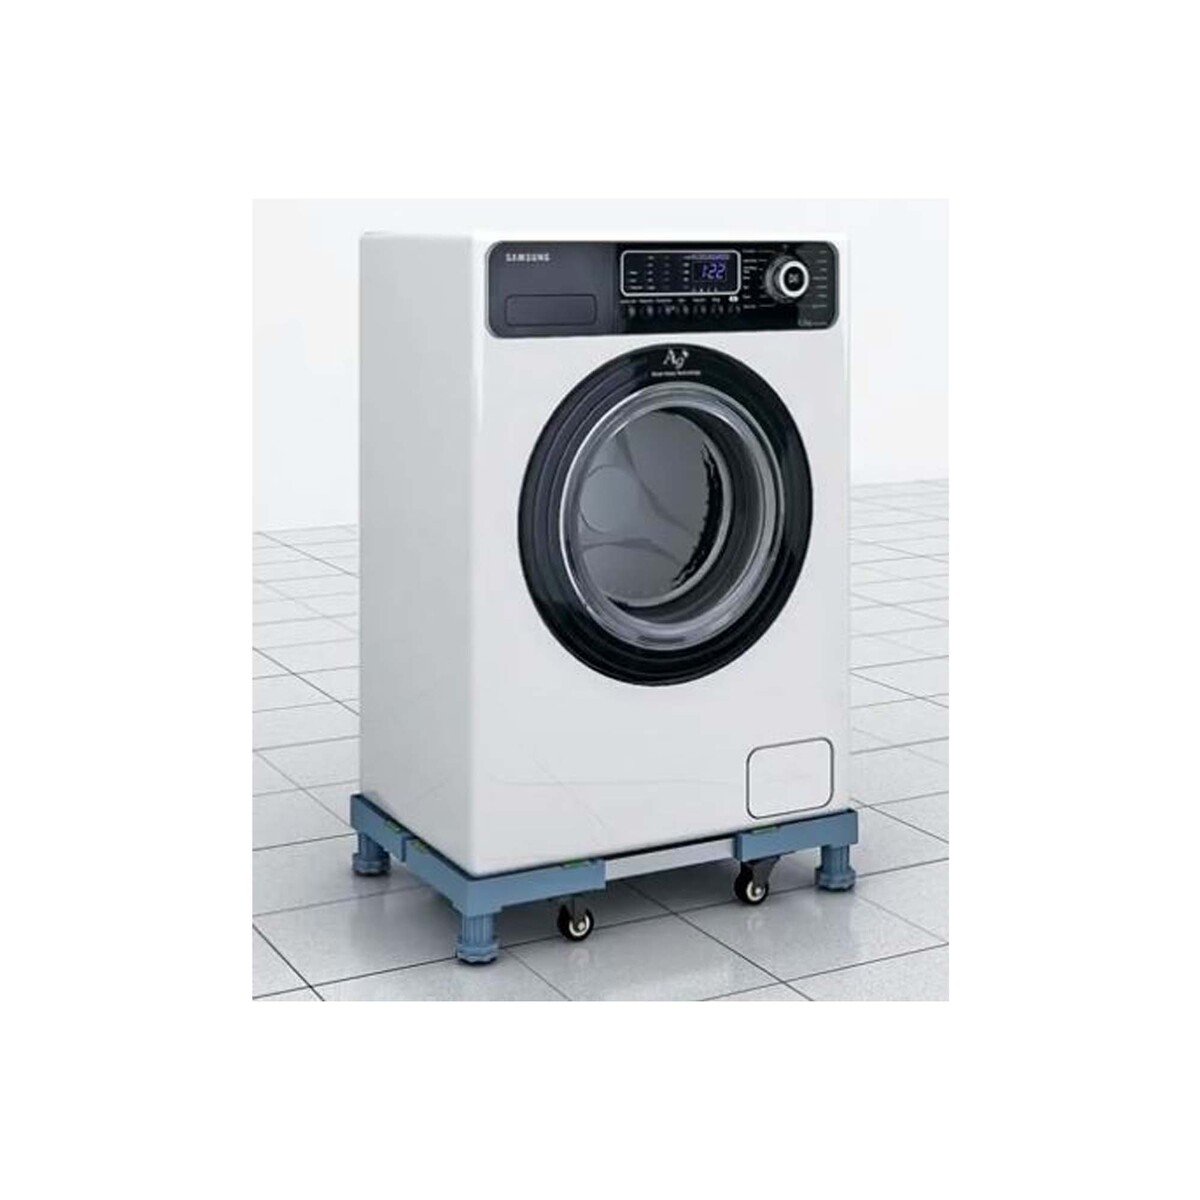 Maple Leaf Adjustable Base Shelf For Washing Machine & Refrigerator HBPRS44 Size: W45-61 x L47-61cm